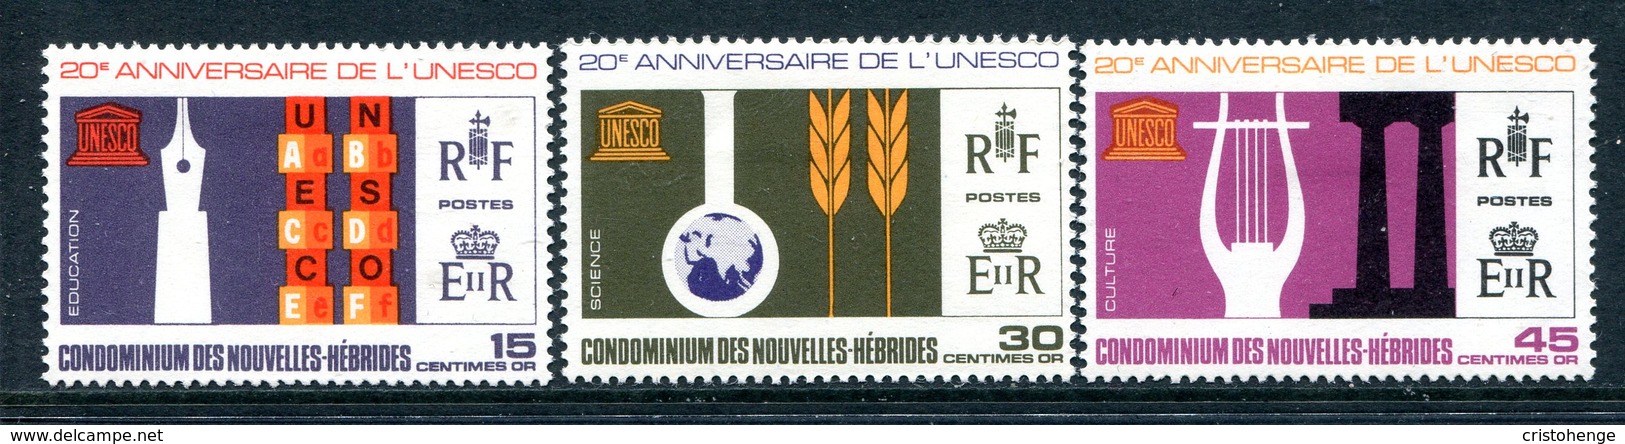 Nouvelles Hebrides 1966 20th Anniversary Of UNESCO Set HM (SG F138-F140) - Unused Stamps